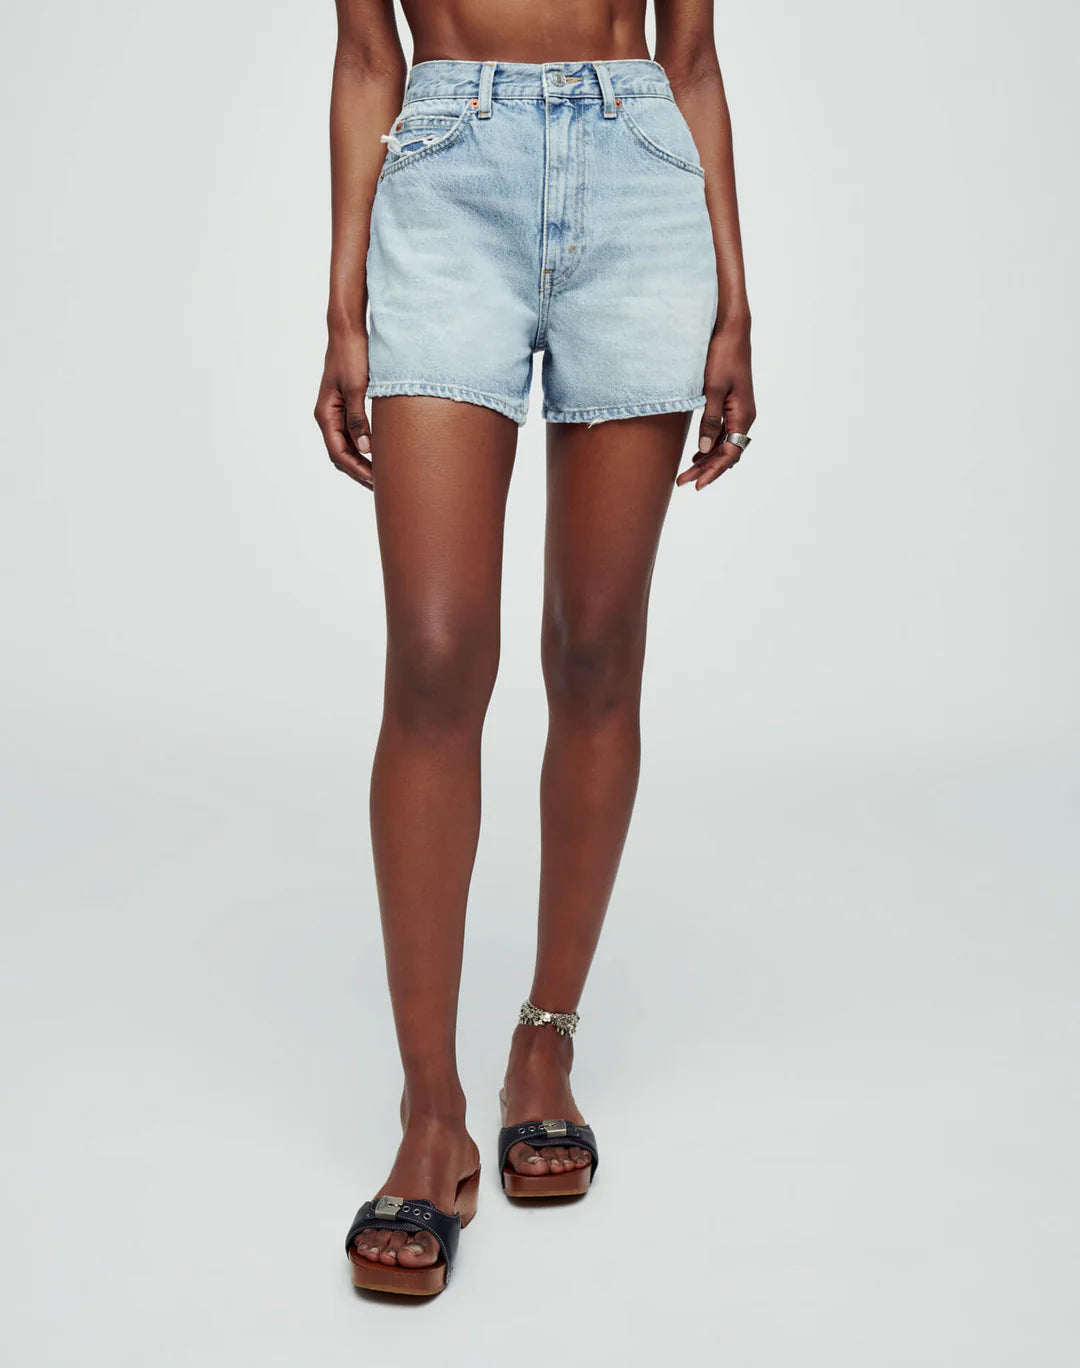 RE/DONE The Midi Short, jean shorts, denim shorts, shorts, women's clothing